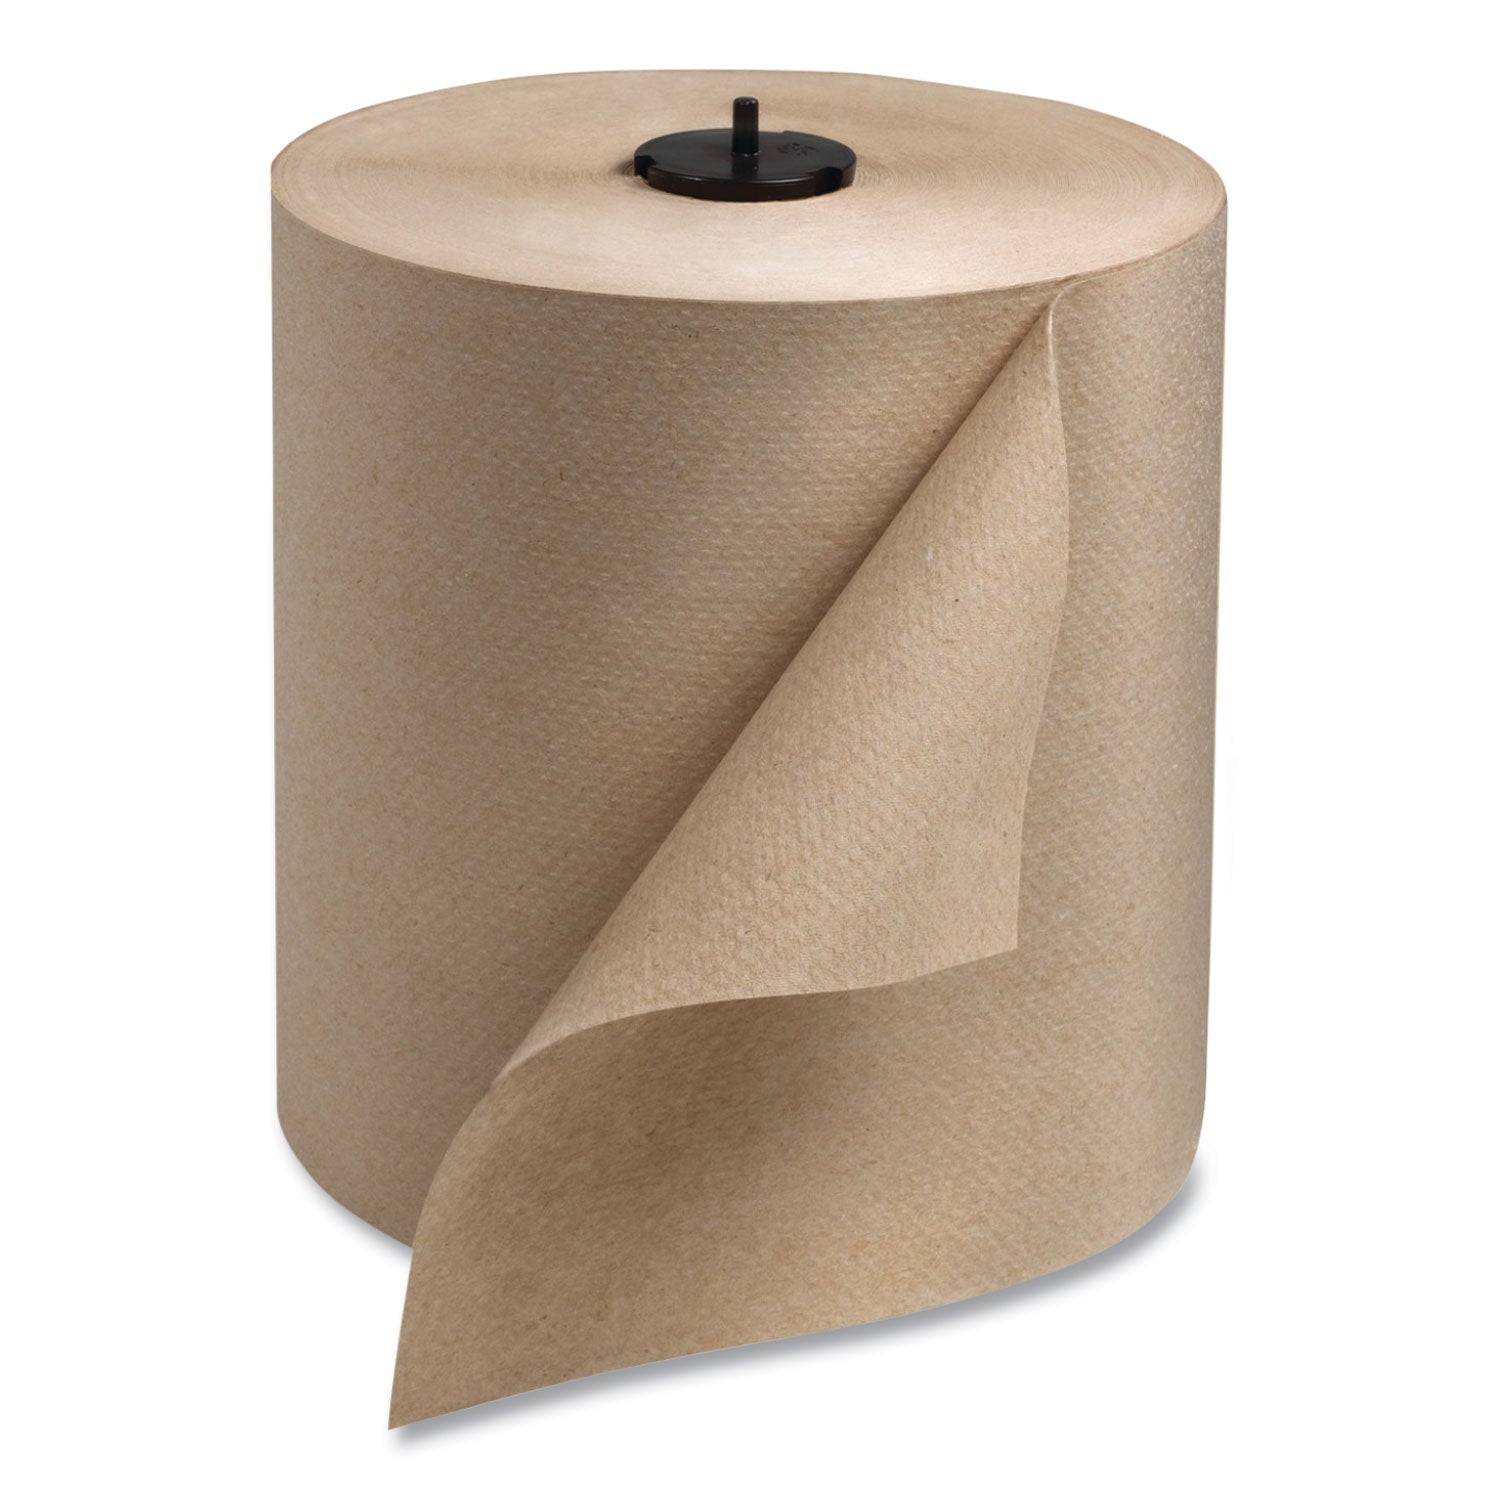 basic-paper-wiper-roll-towel-1-ply-768-x-1150-ft-natural-4-rolls-carton_trk291350 - 1